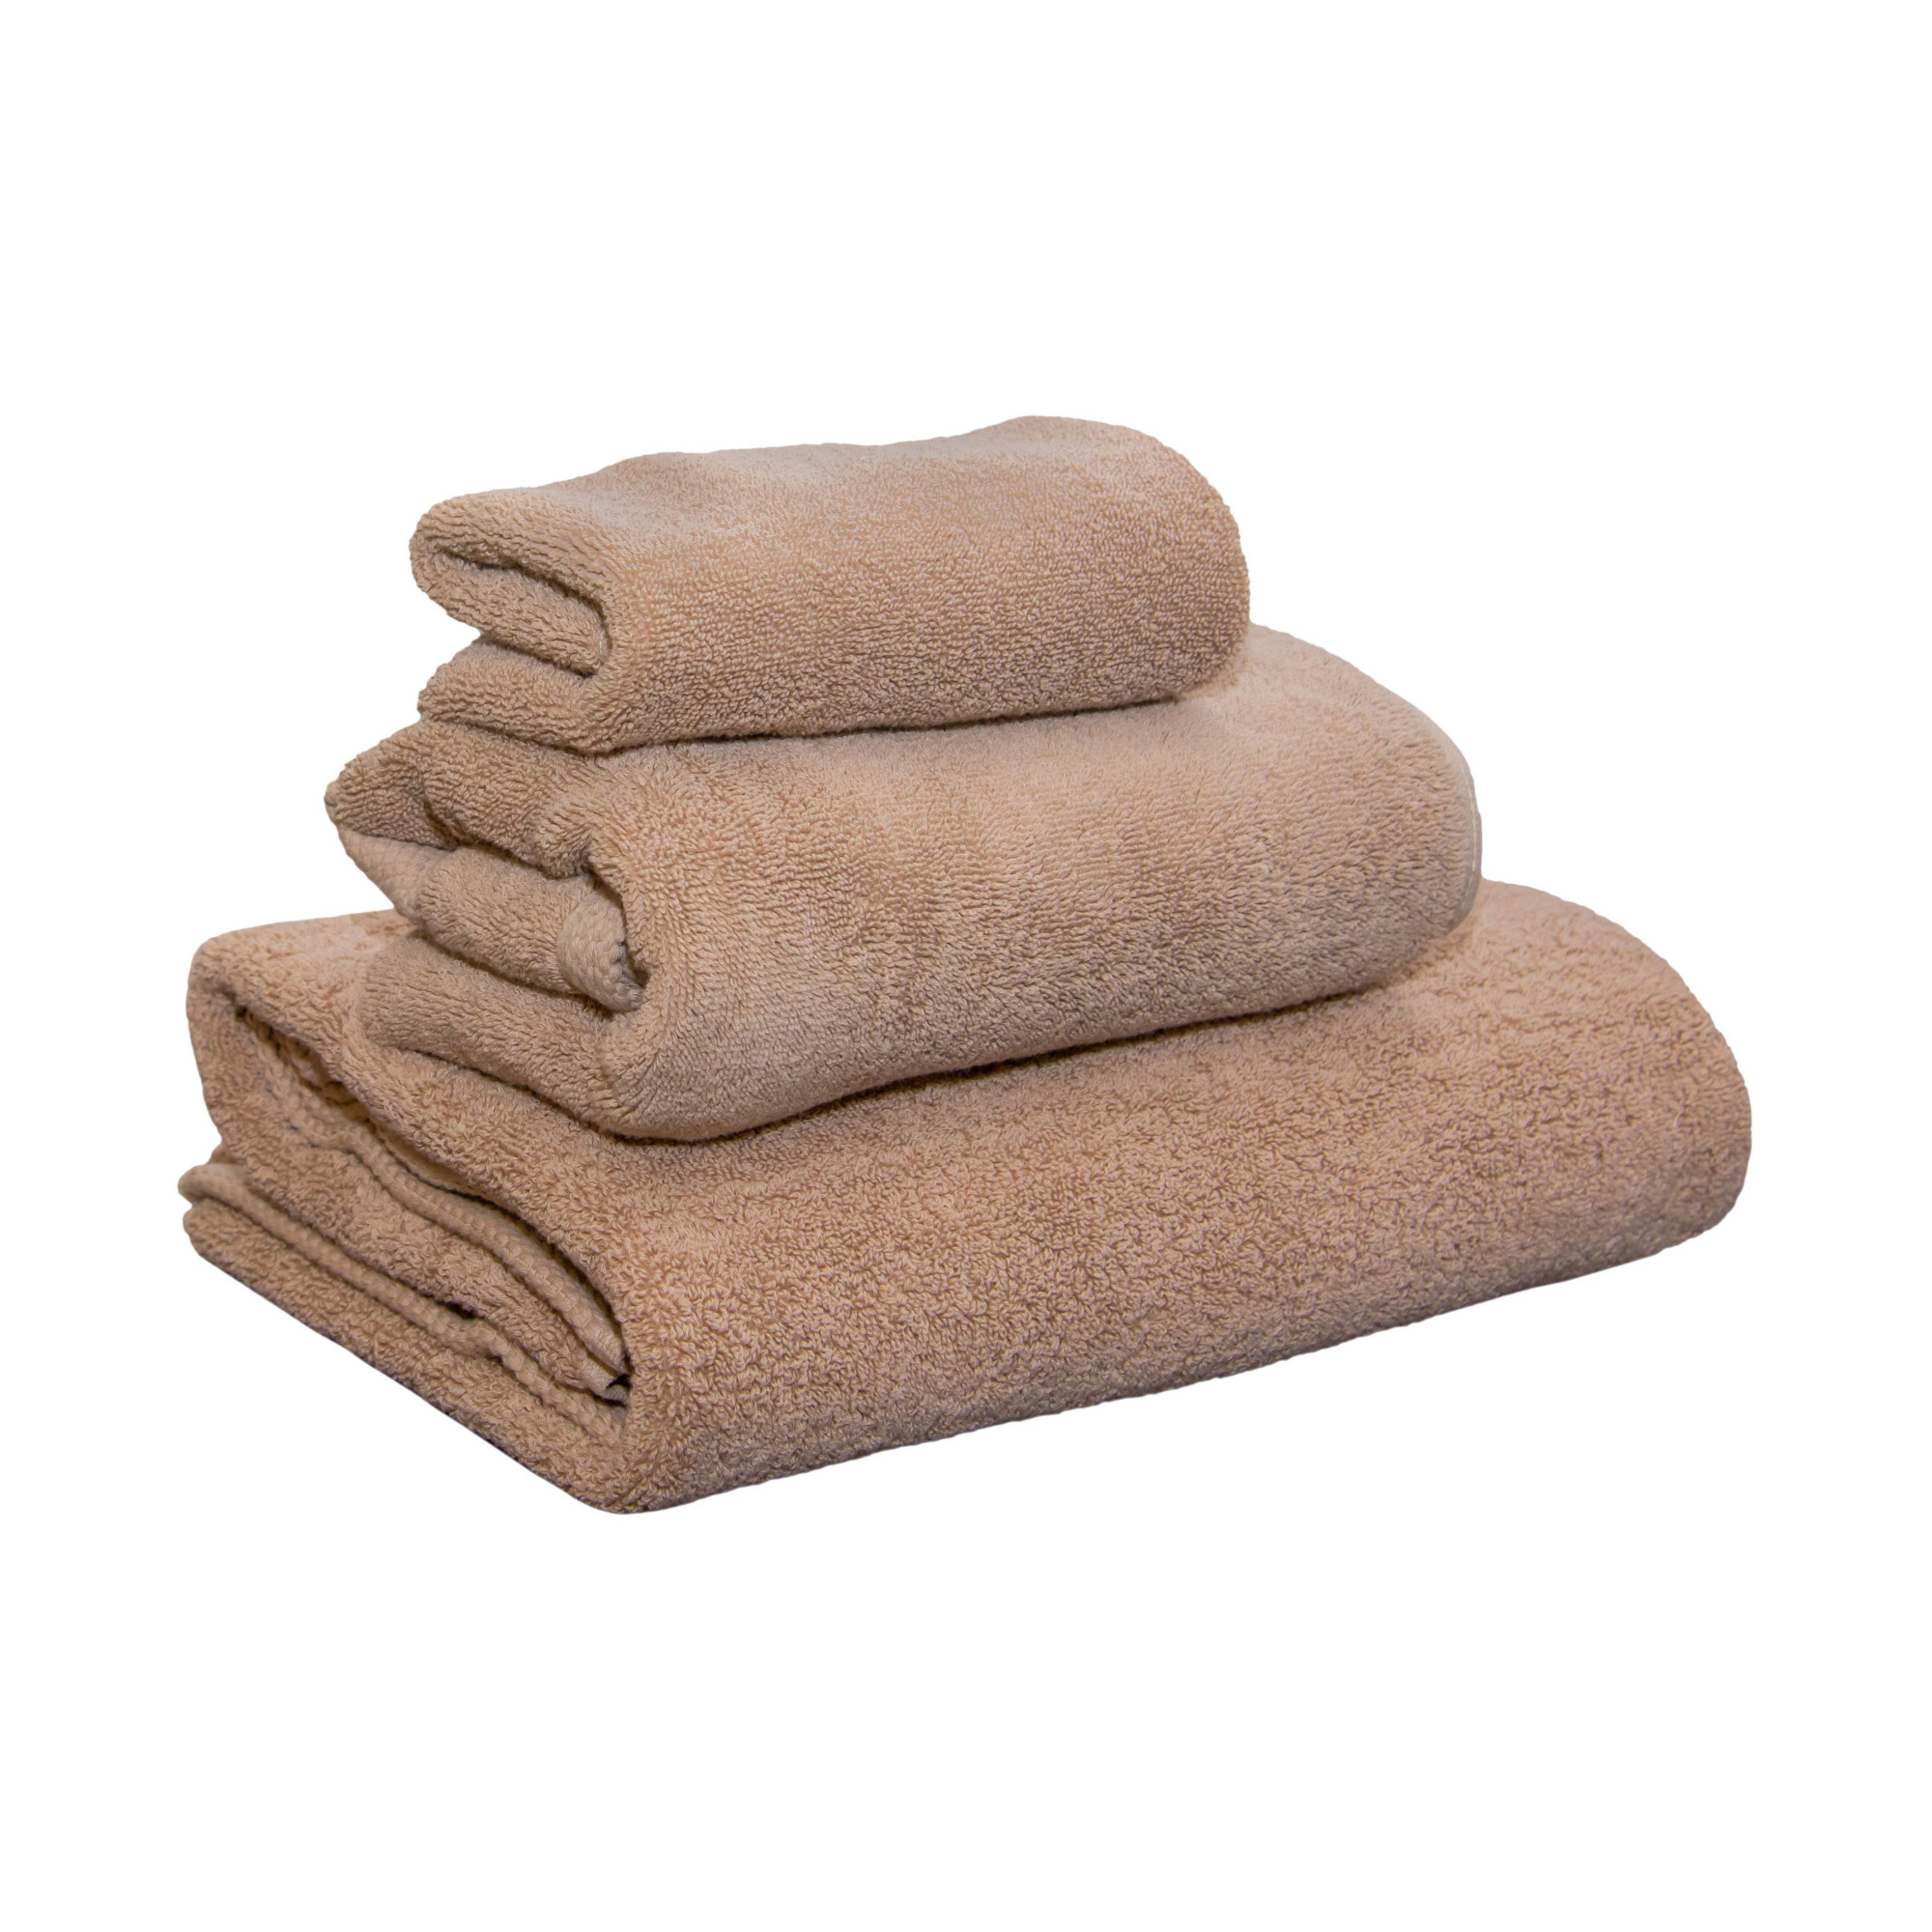 Terry towel 50x90, cuban sand, 100% cotton